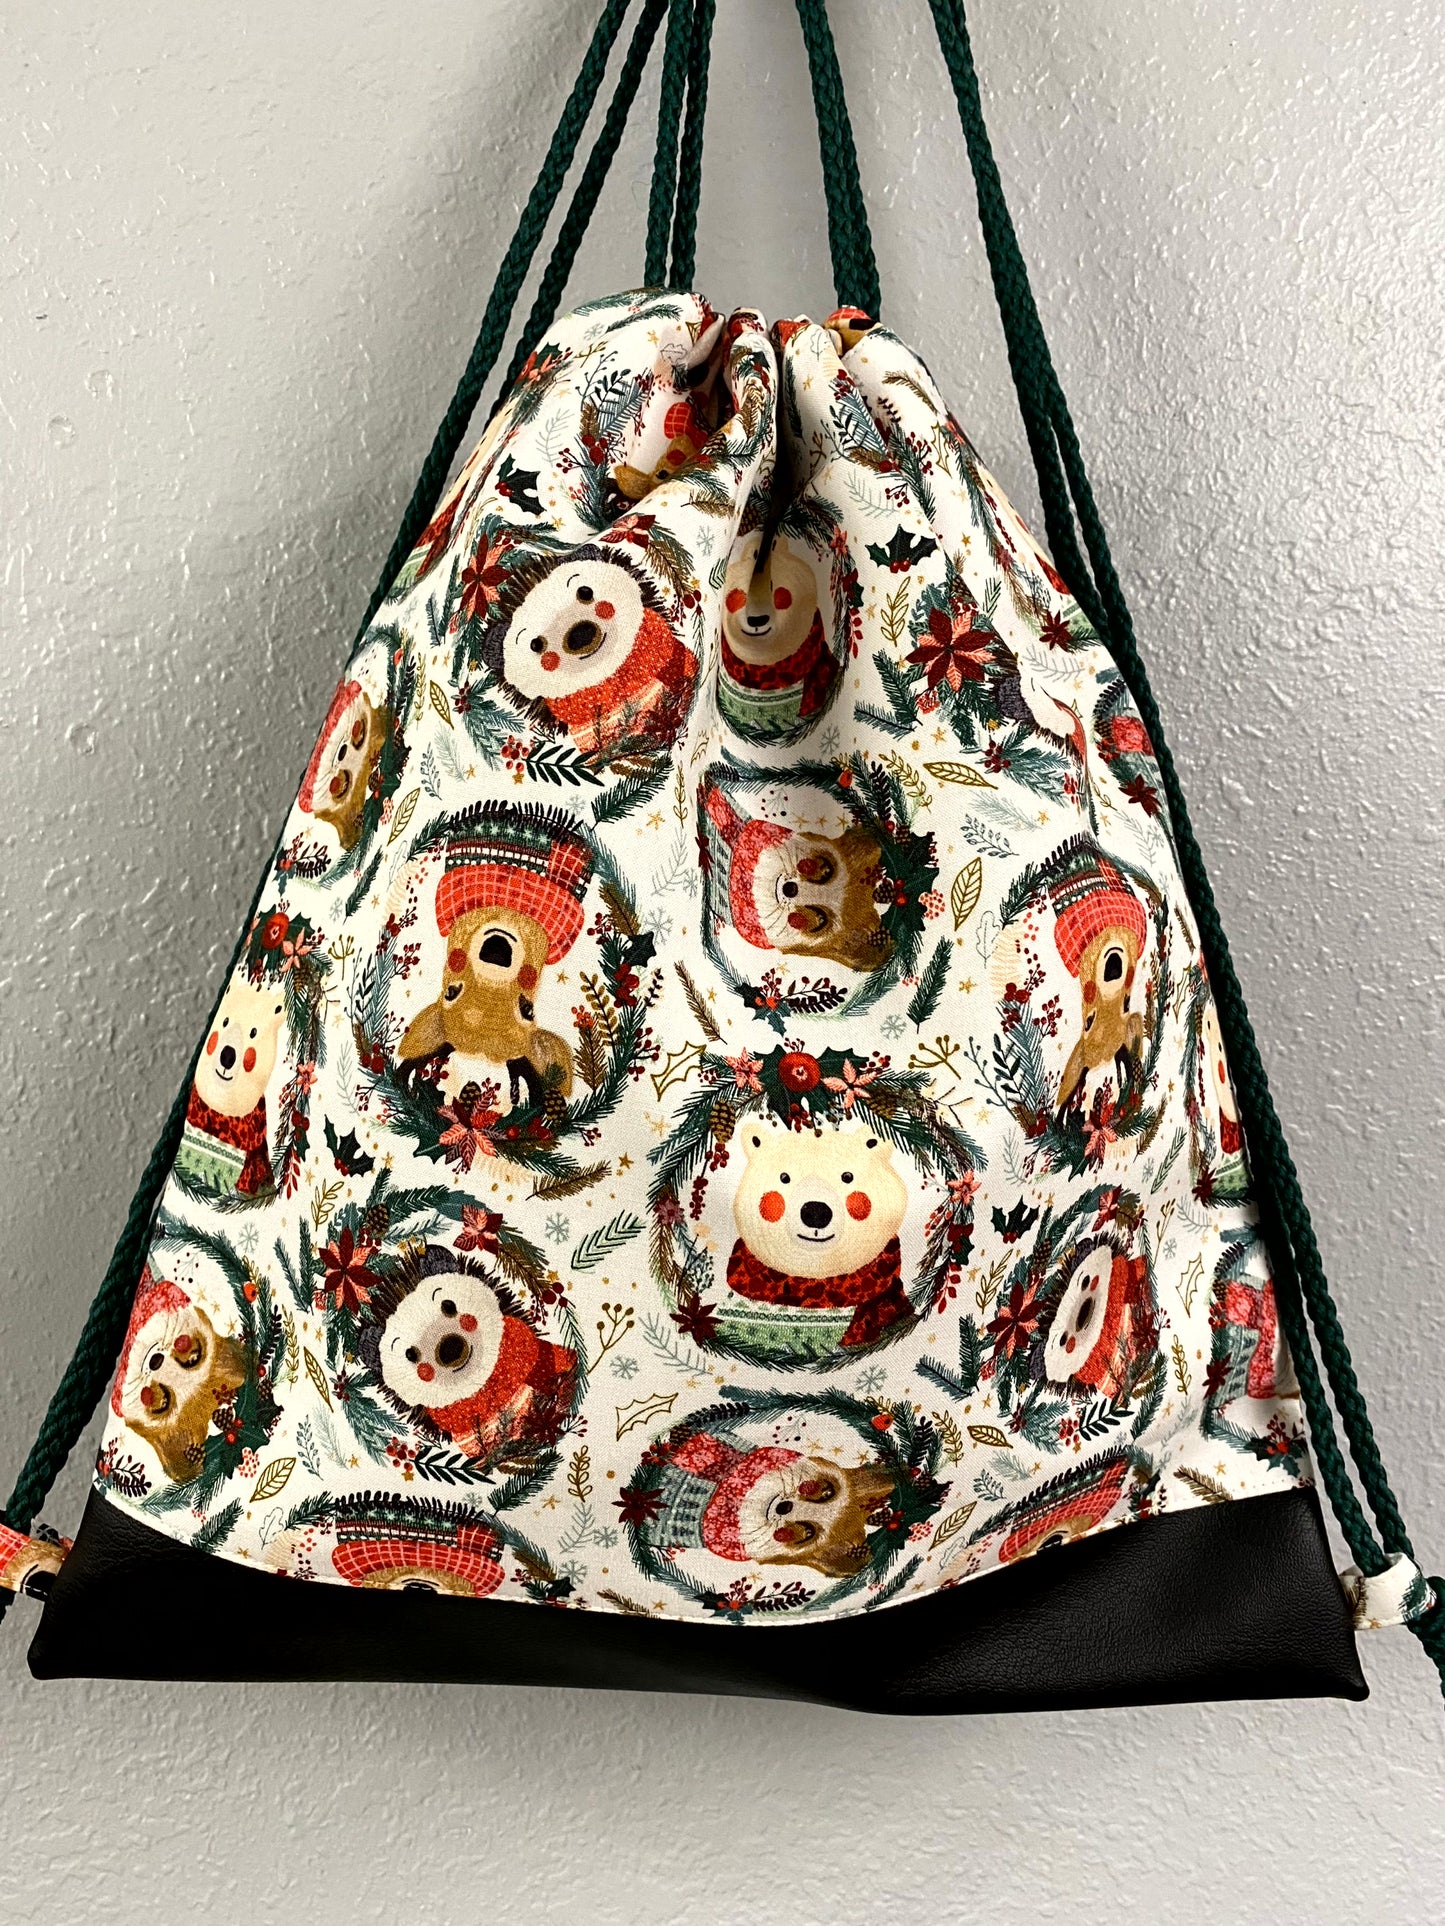 Woodland Drawstring Bag - Handmade Drawstring Bag – Drawstring Backpack - On the Go Bag - Overnight Bag